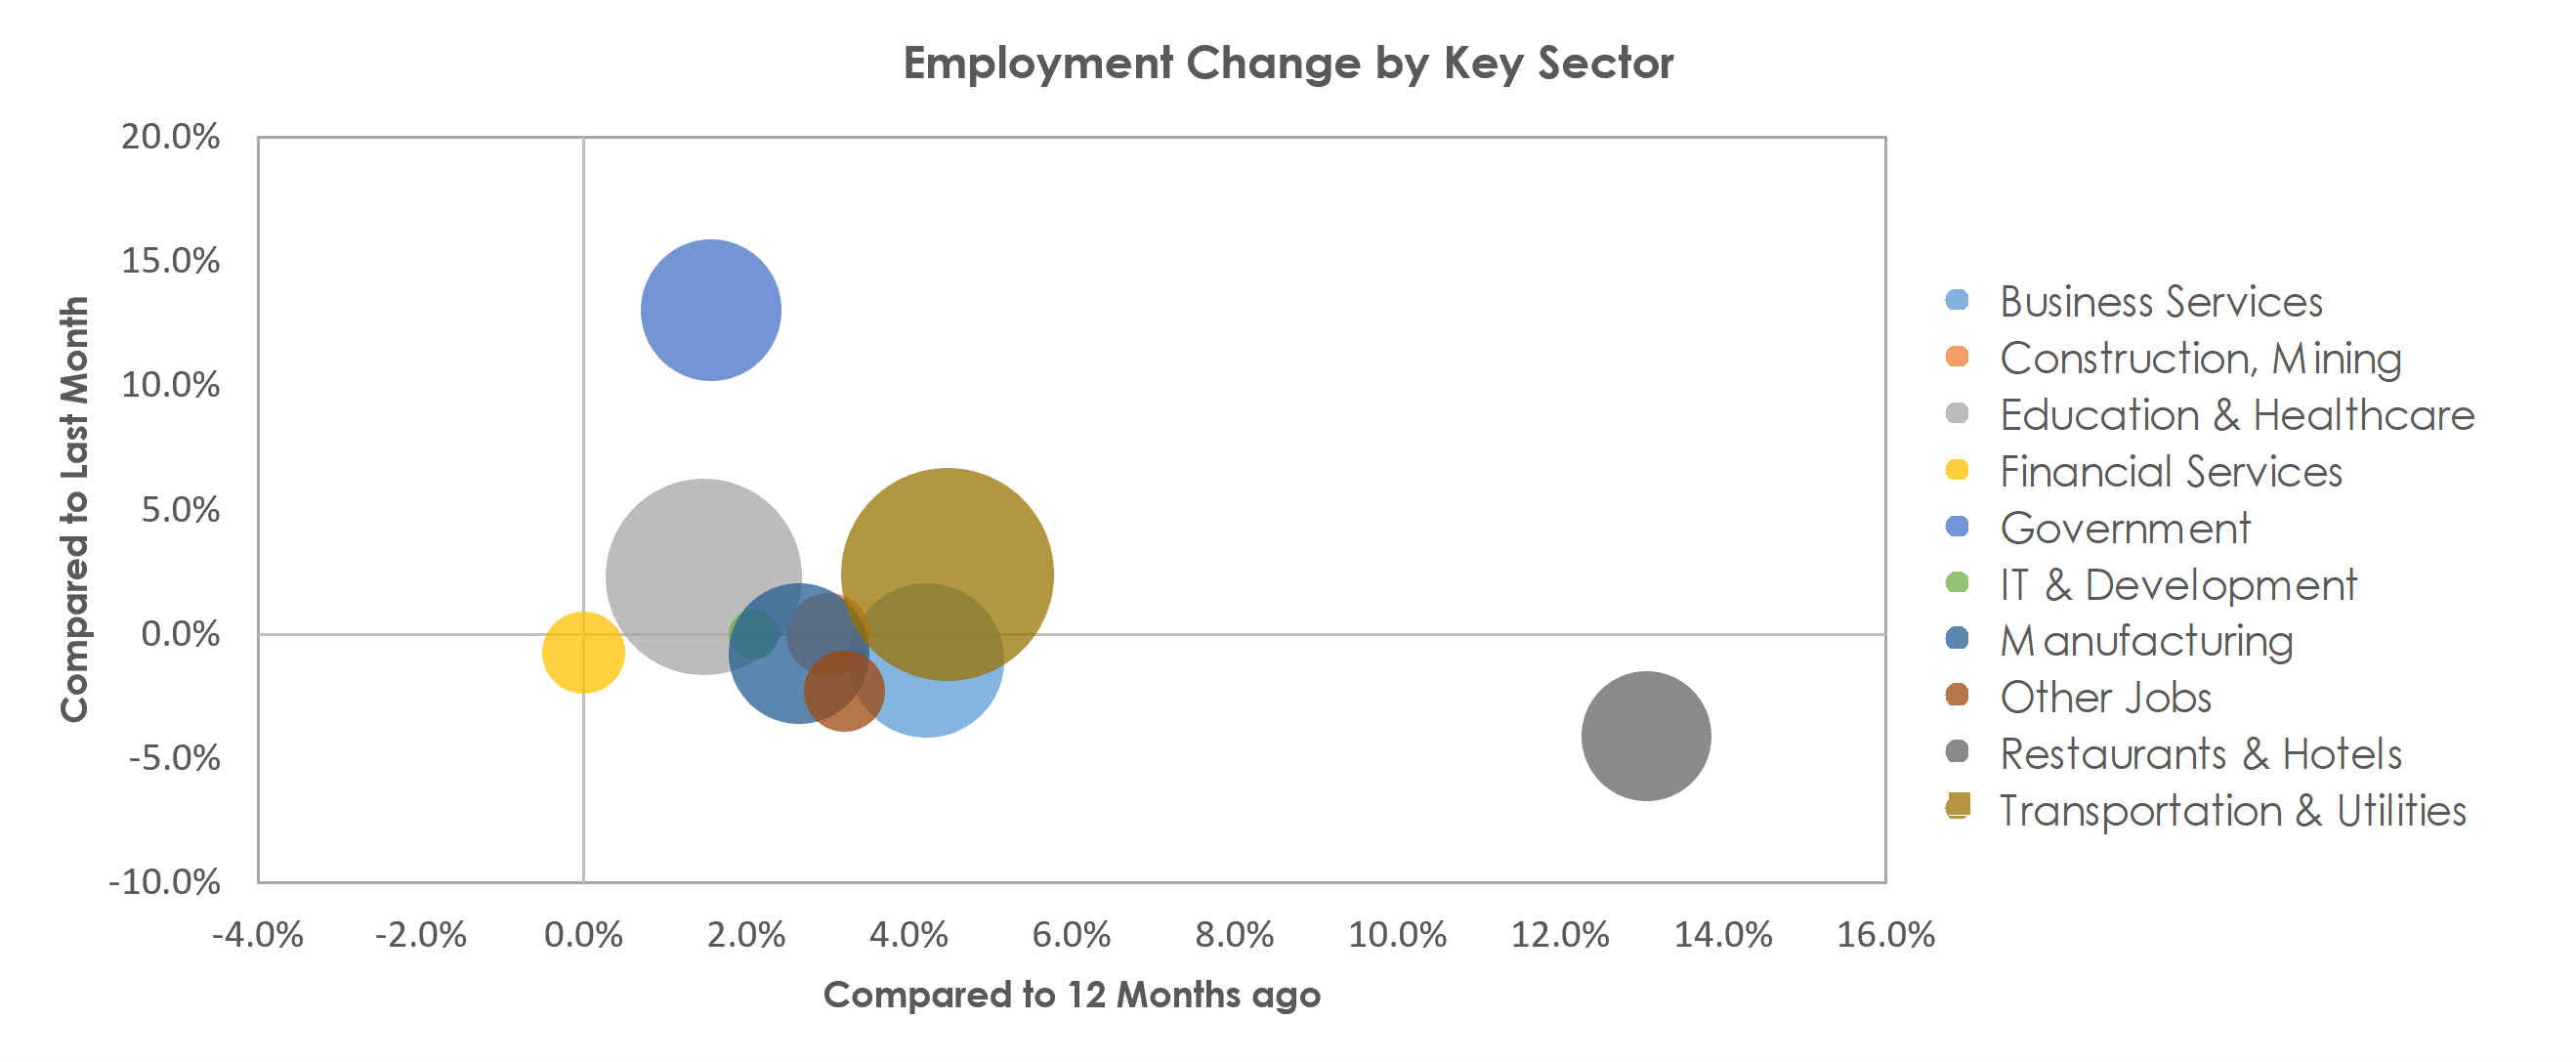 Allentown-Bethlehem-Easton, PA-NJ Unemployment by Industry September 2021